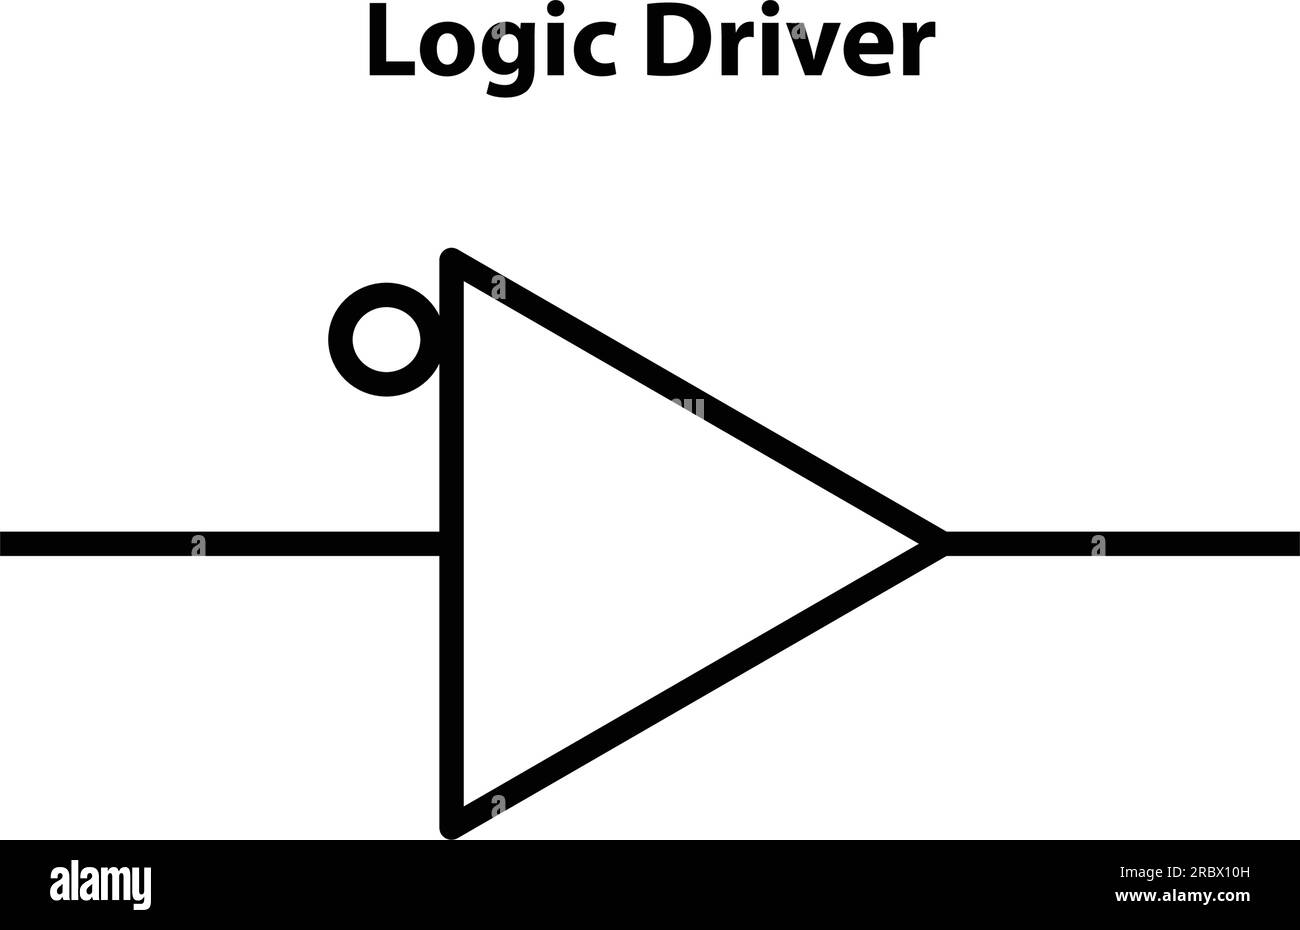 Logic driver. electronic symbol. Illustration of basic circuit symbols. Electrical symbols, study content of physics students.  electrical circuits. Stock Vector